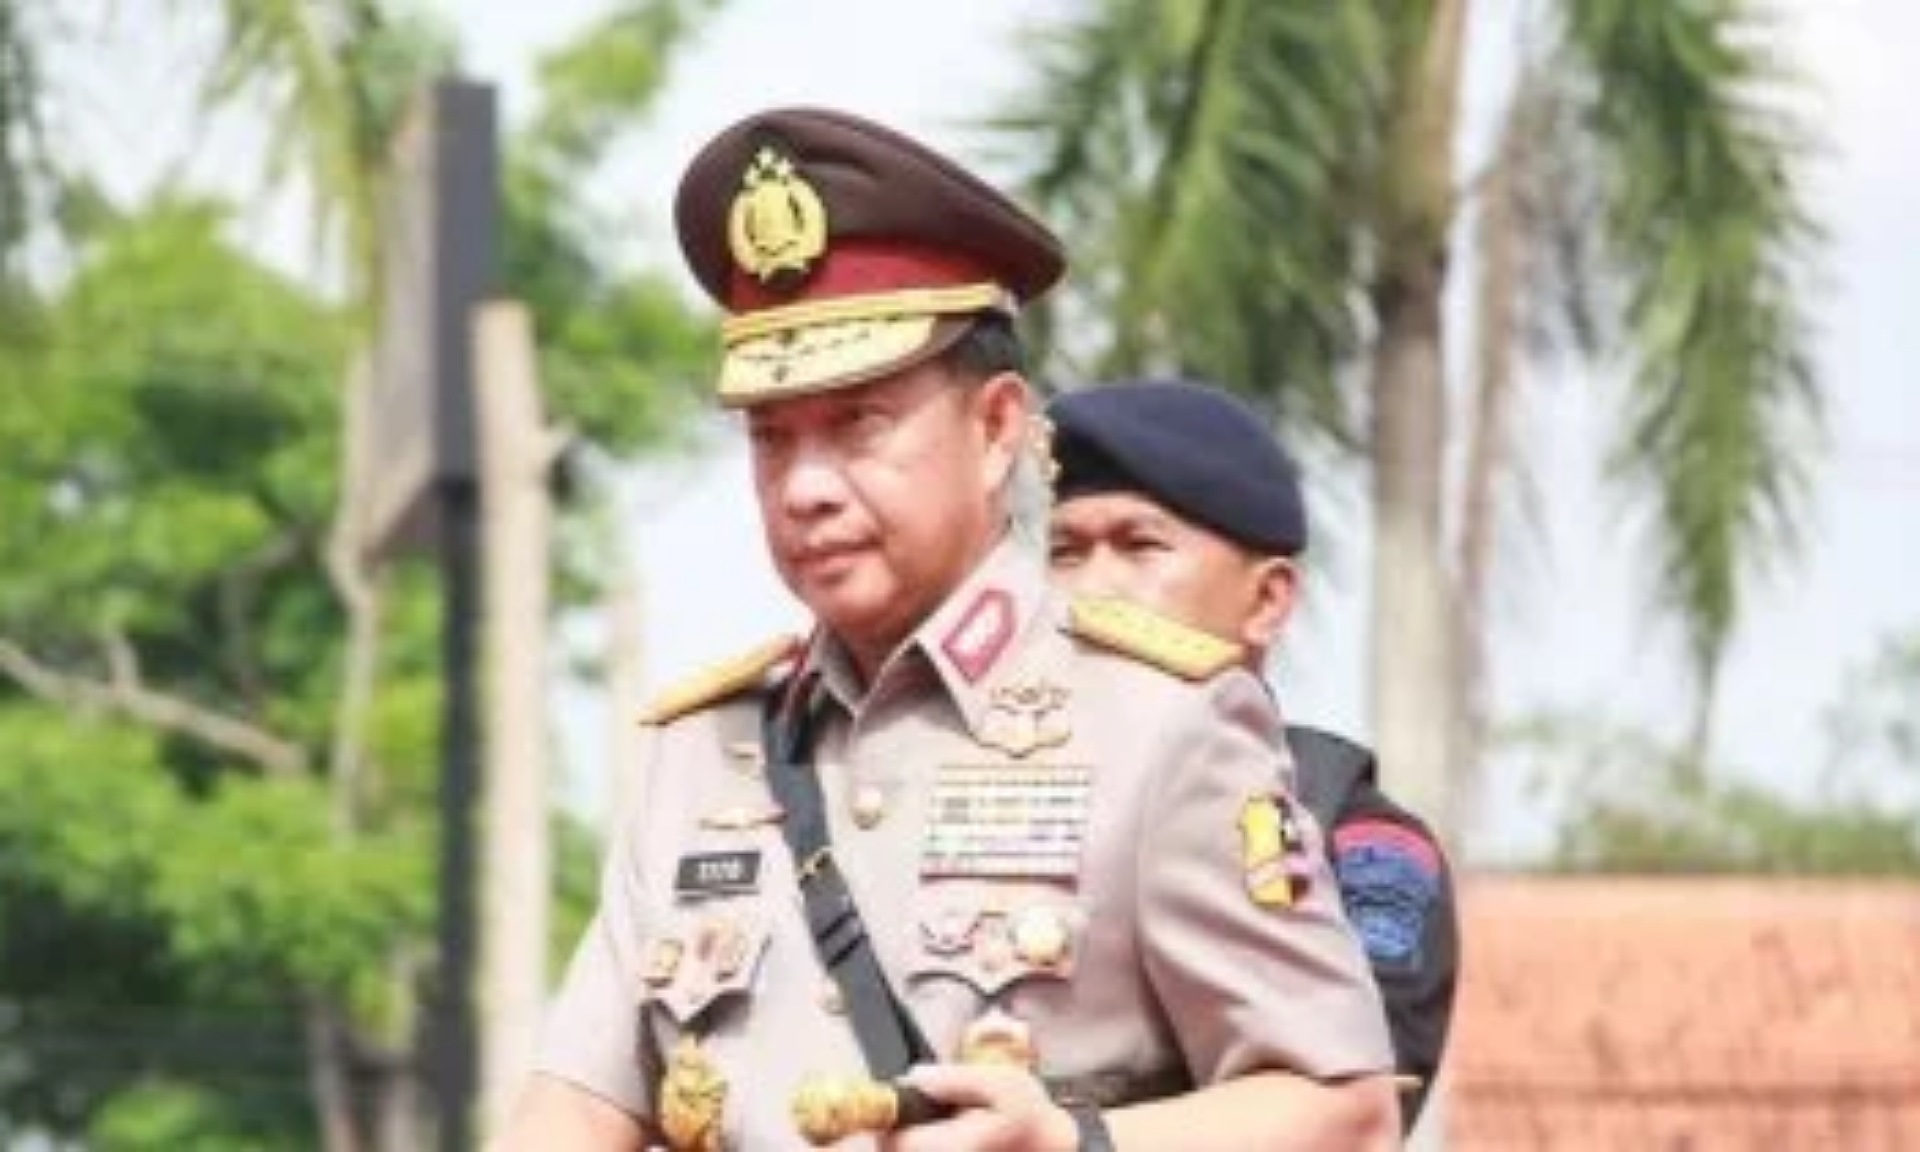 Kapolri: Target Pembunuhan 22 Mei, Wiranto, Luhut Hingga Budi Gunawan